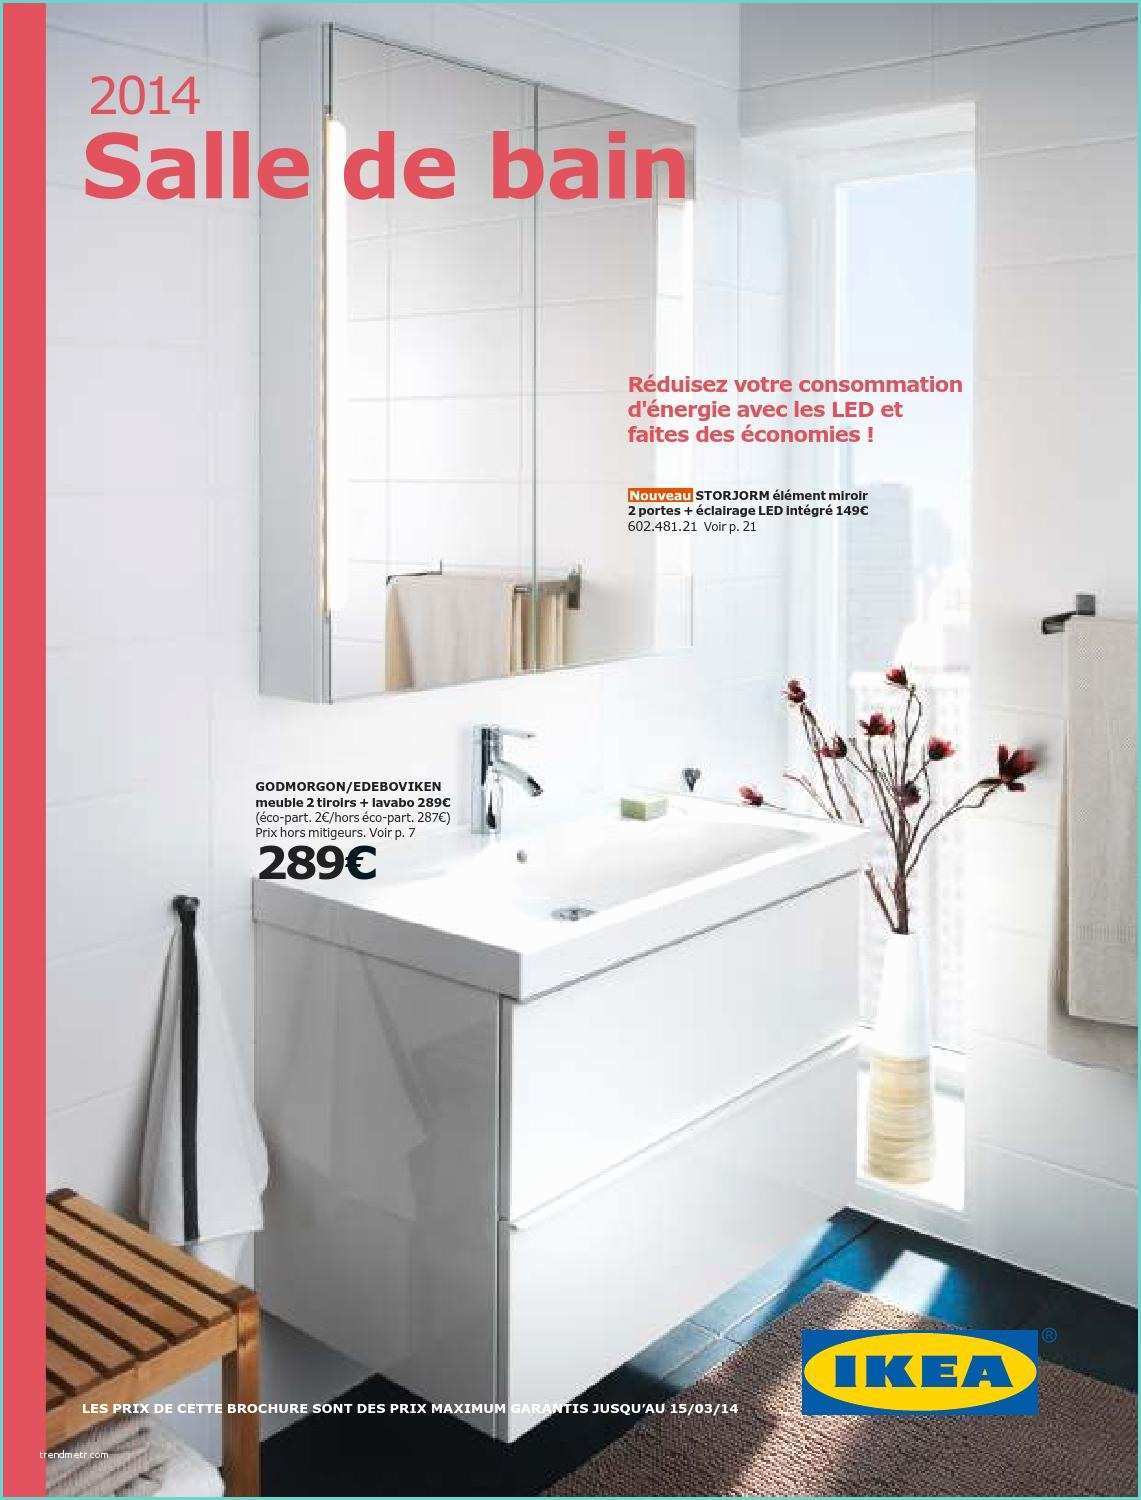 Ikea Salle De Bain Catalogue Range Brochure Bathroom Ikea Fr 14 by Ikea Catalog issuu